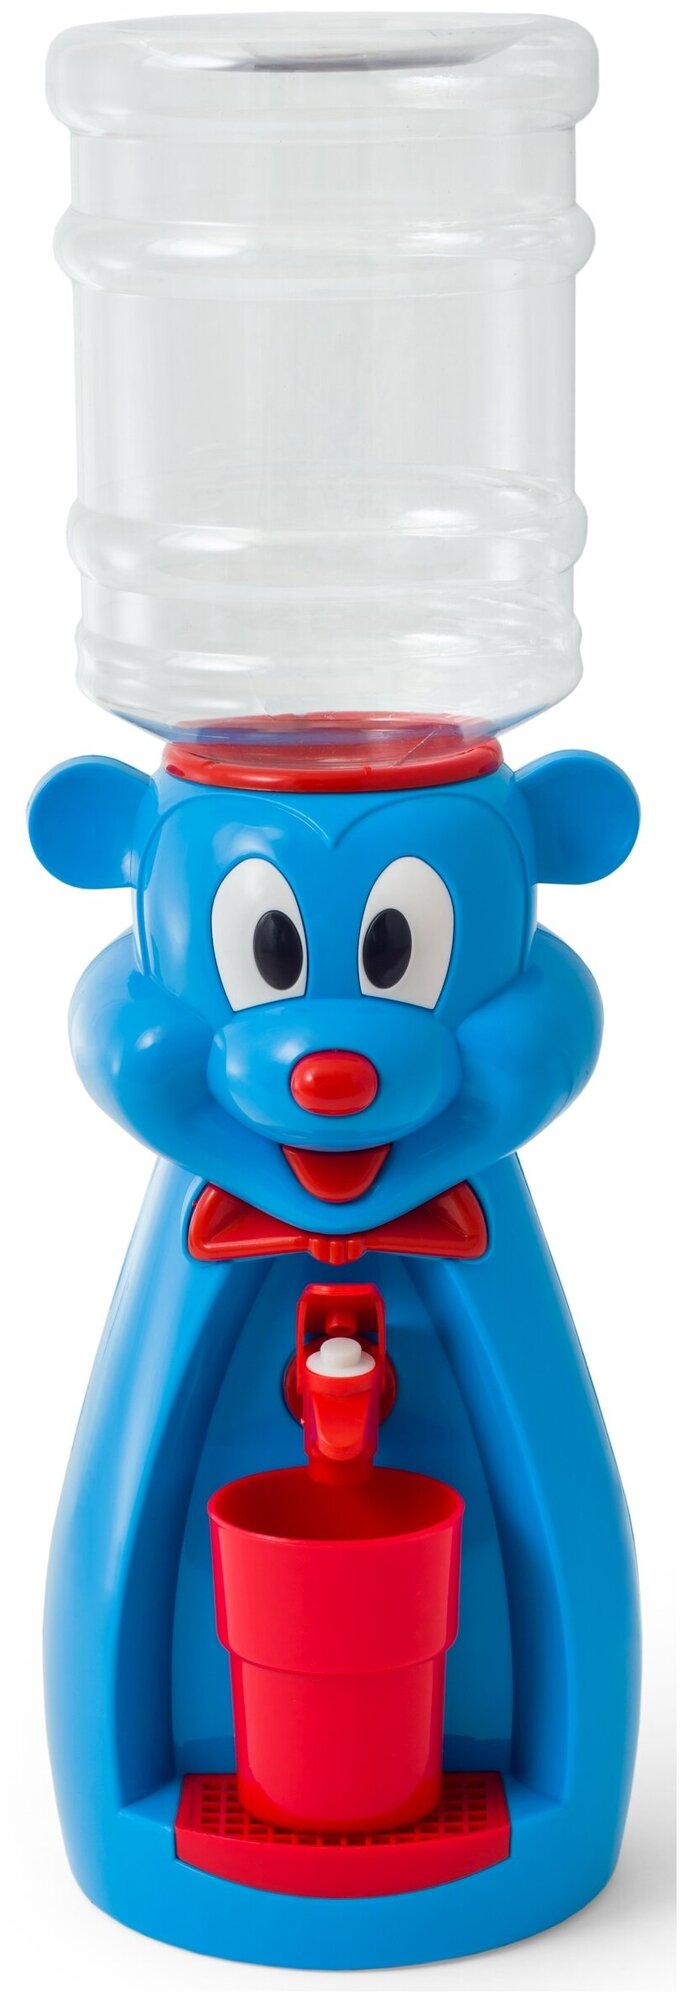 Детский кулер для воды VATTEN kids Mouse Blue